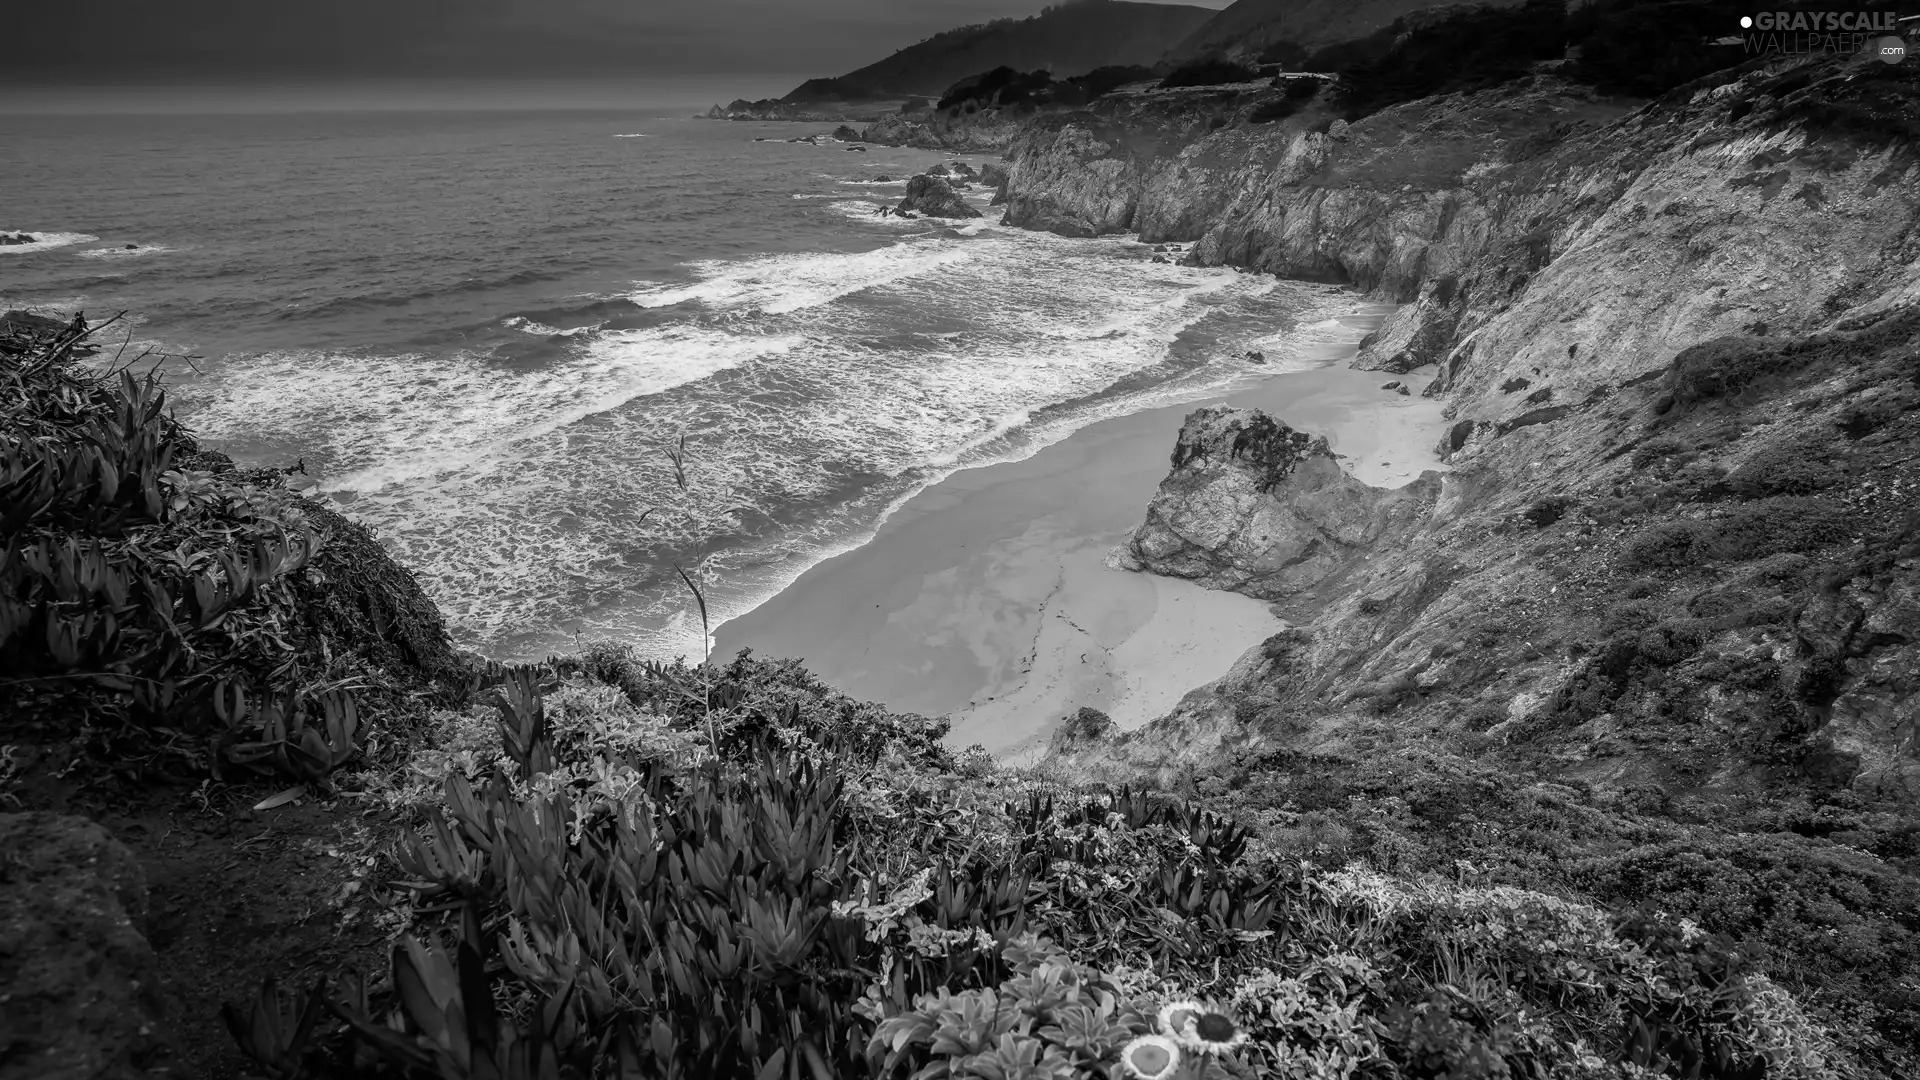 sea, Julia Pfeiffer Burns State Park, Beaches, Coast, California, The United States, VEGETATION, Flowers, rocks